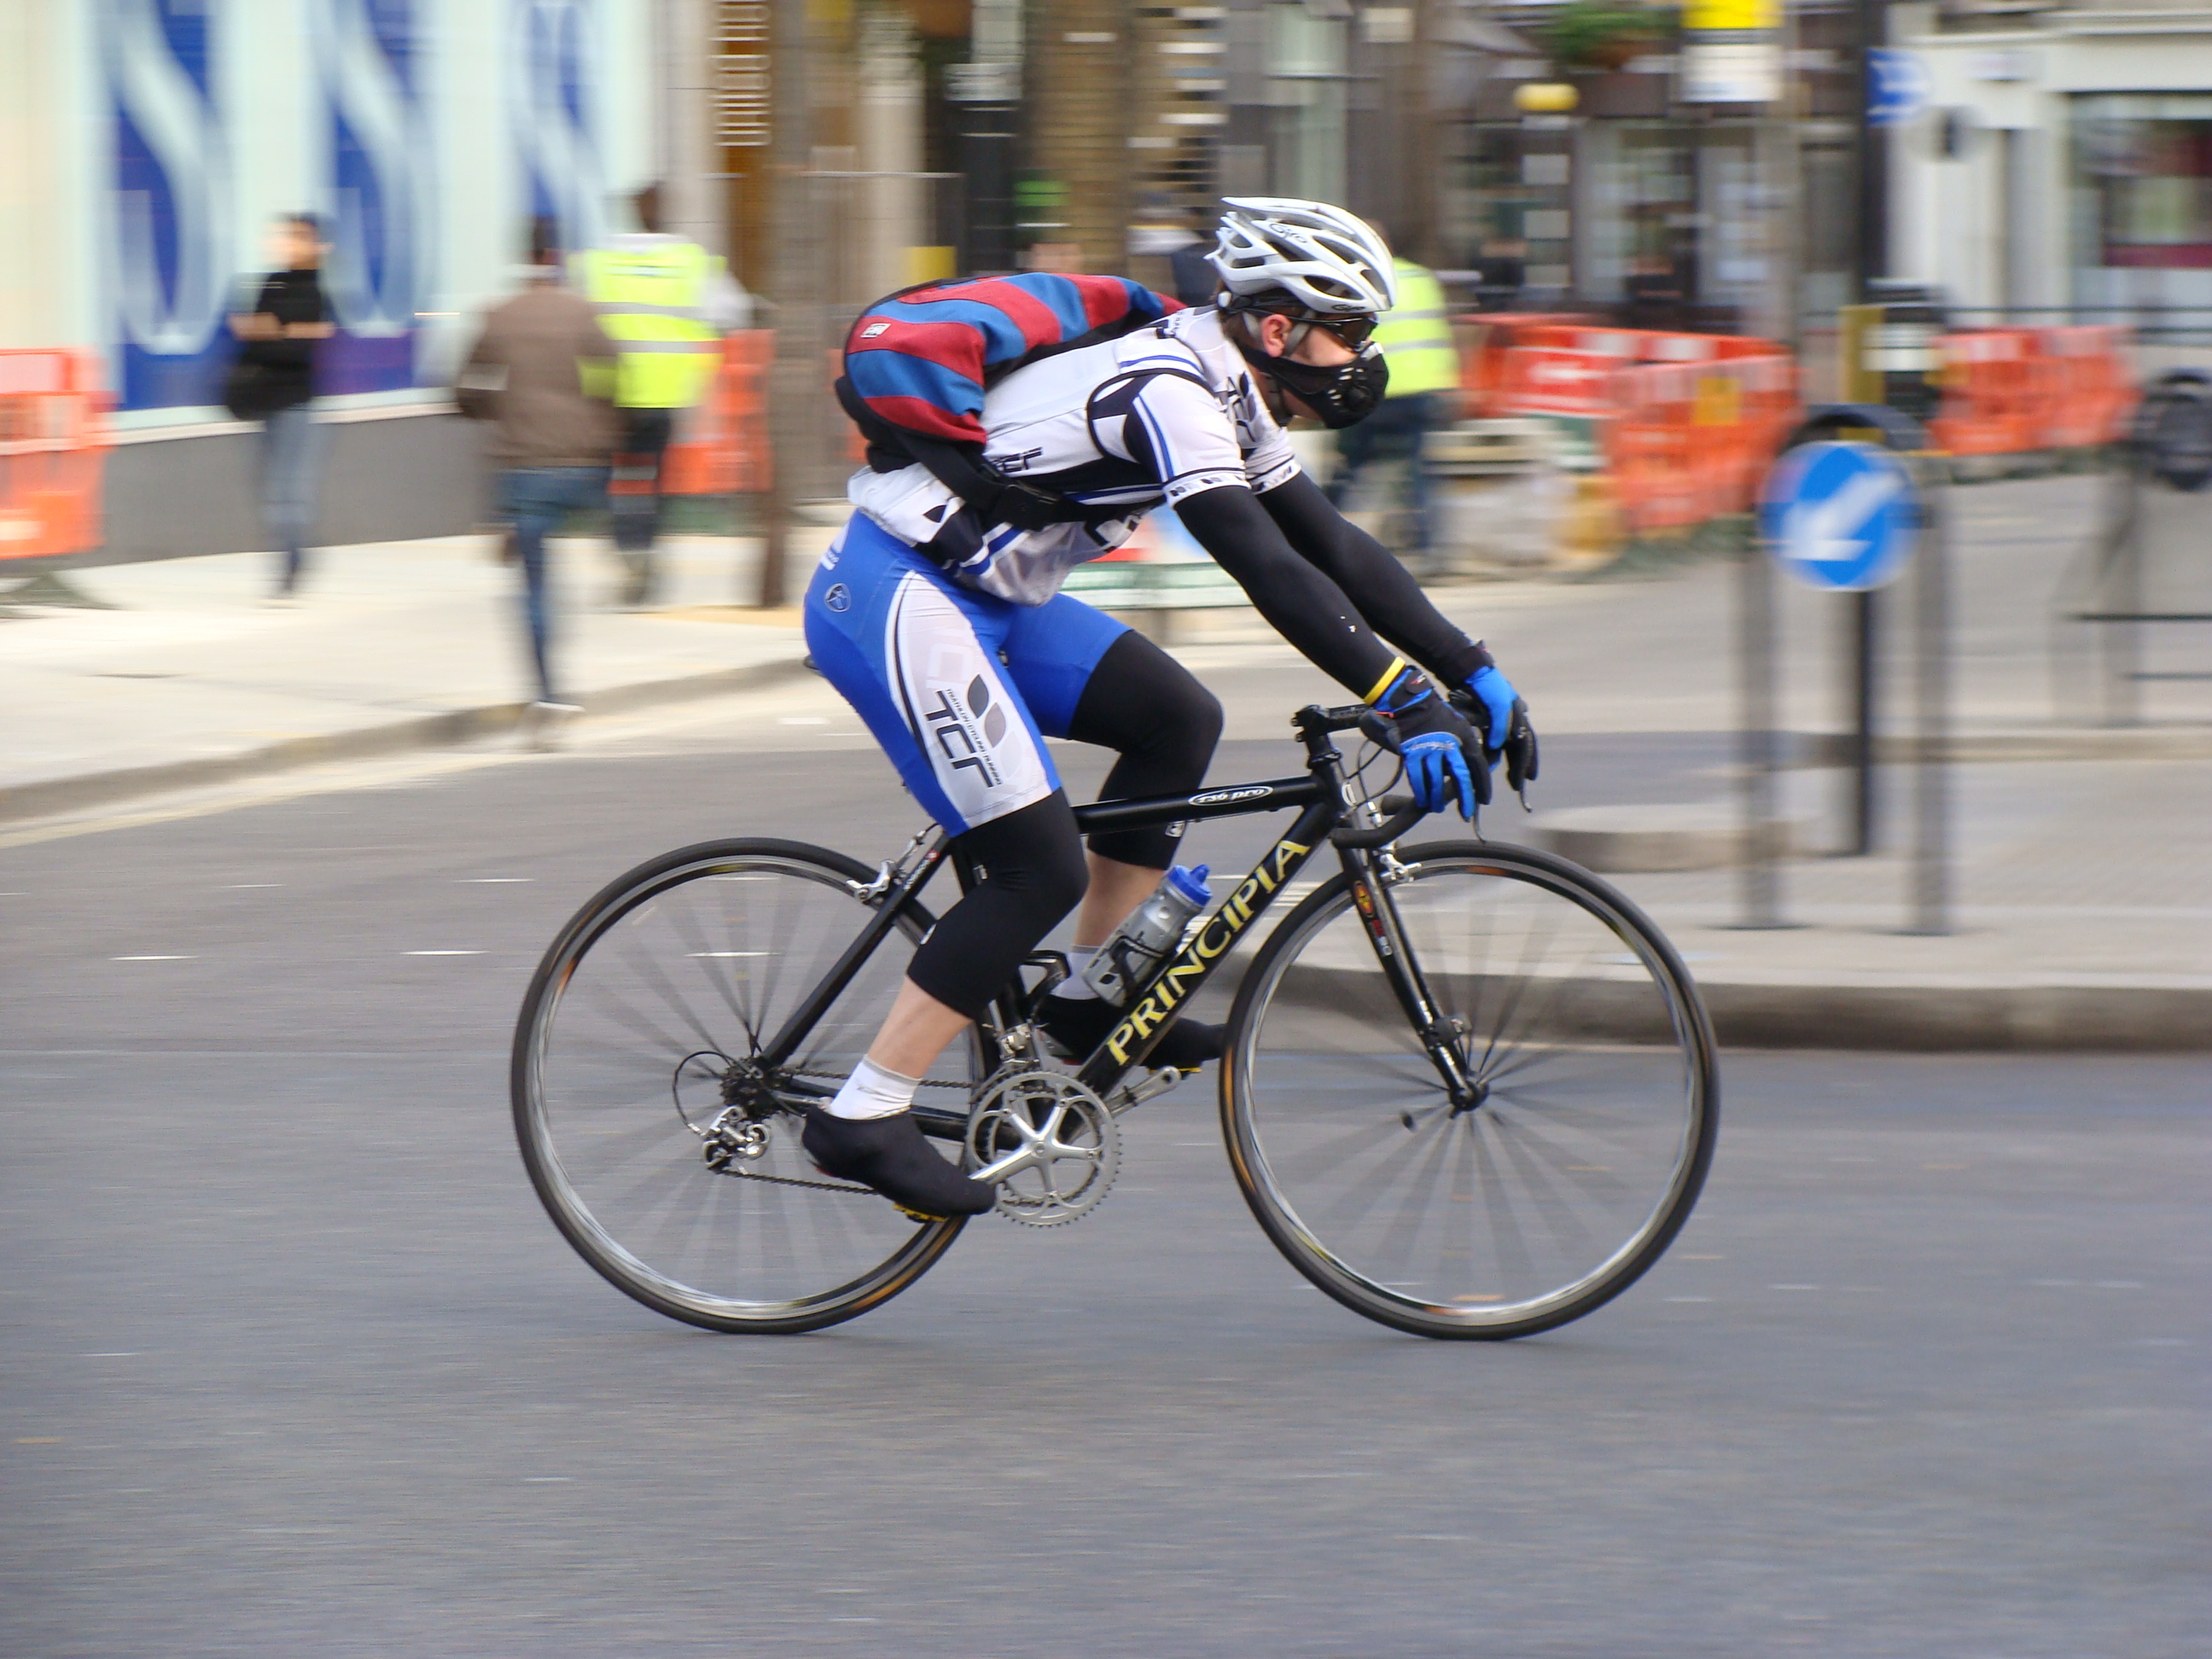 File:Cyclist-189.JPG - Wikimedia Commons